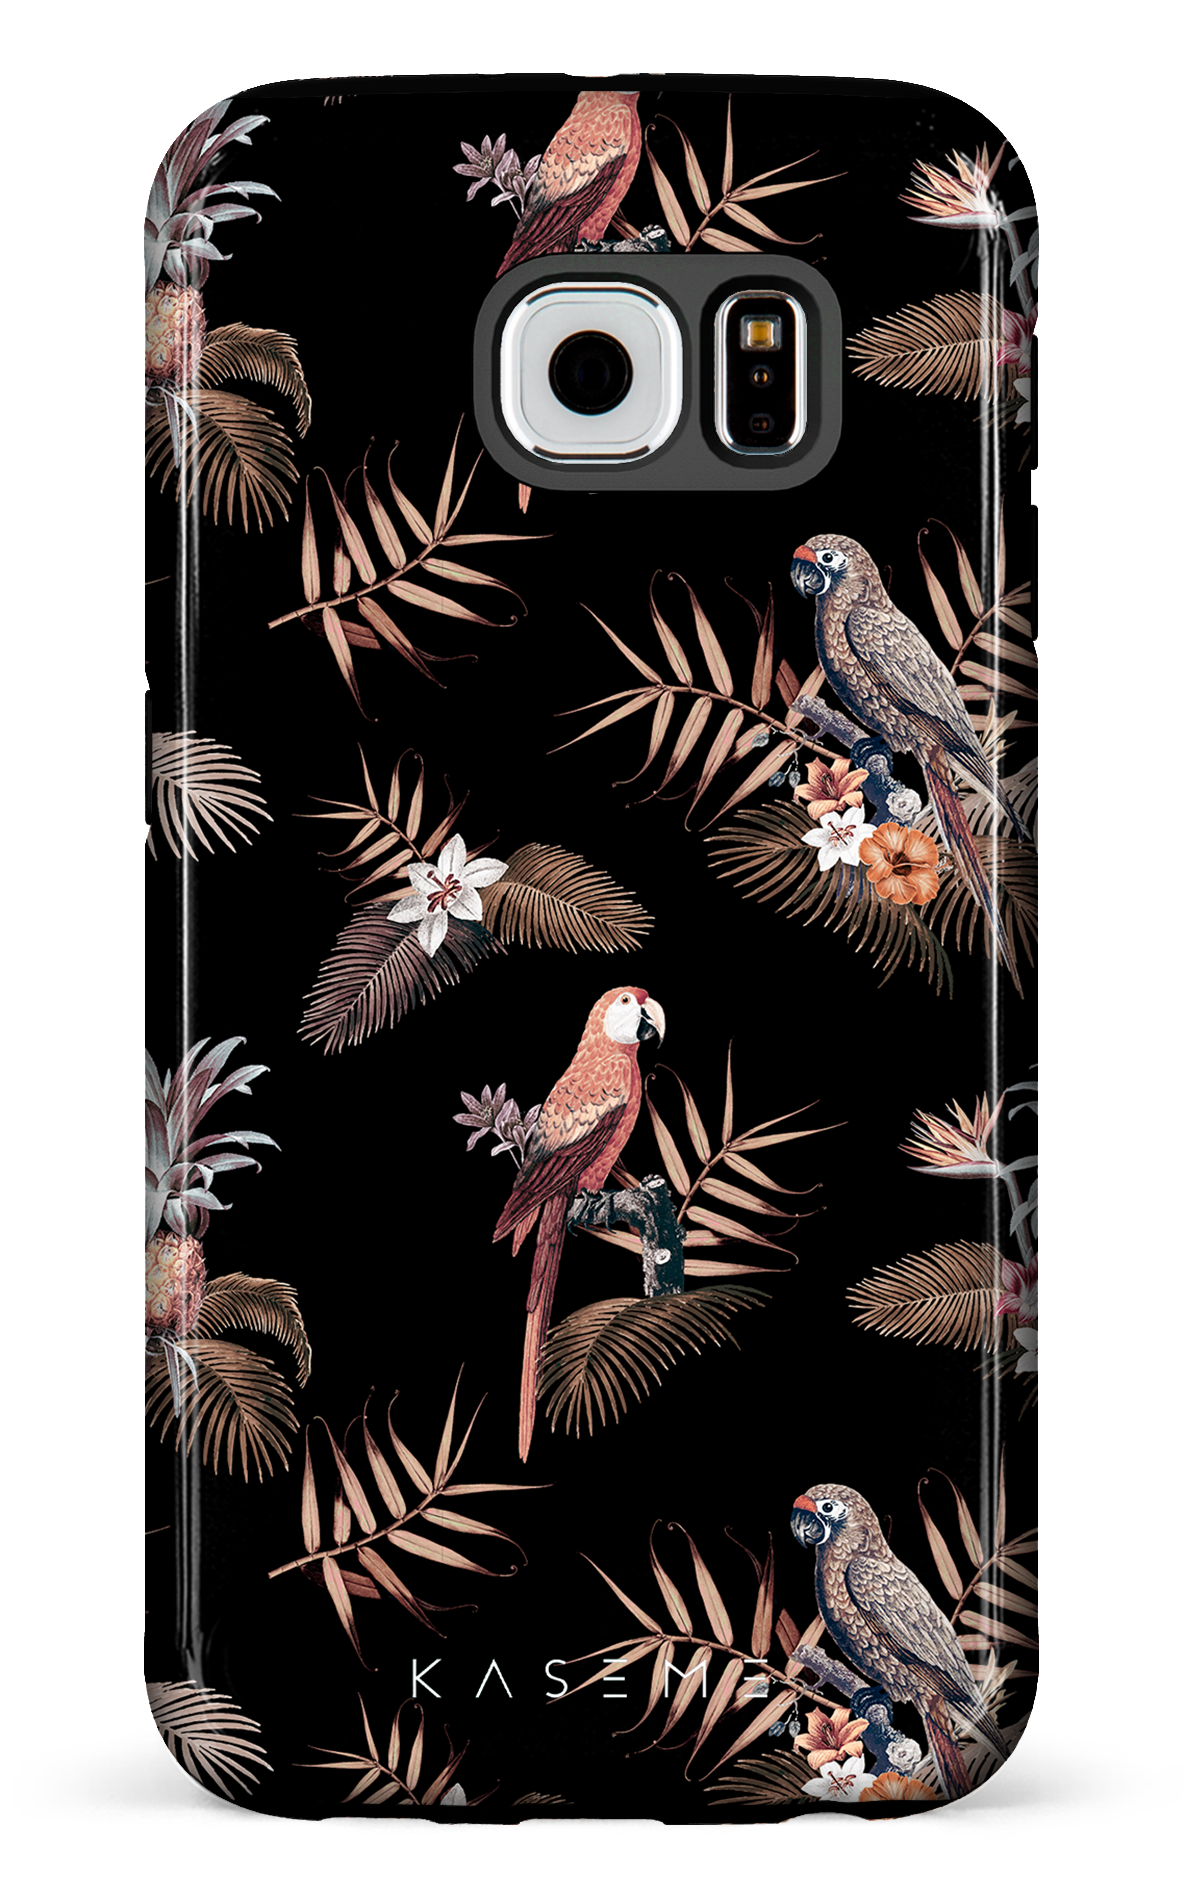 Rainforest - Galaxy S6